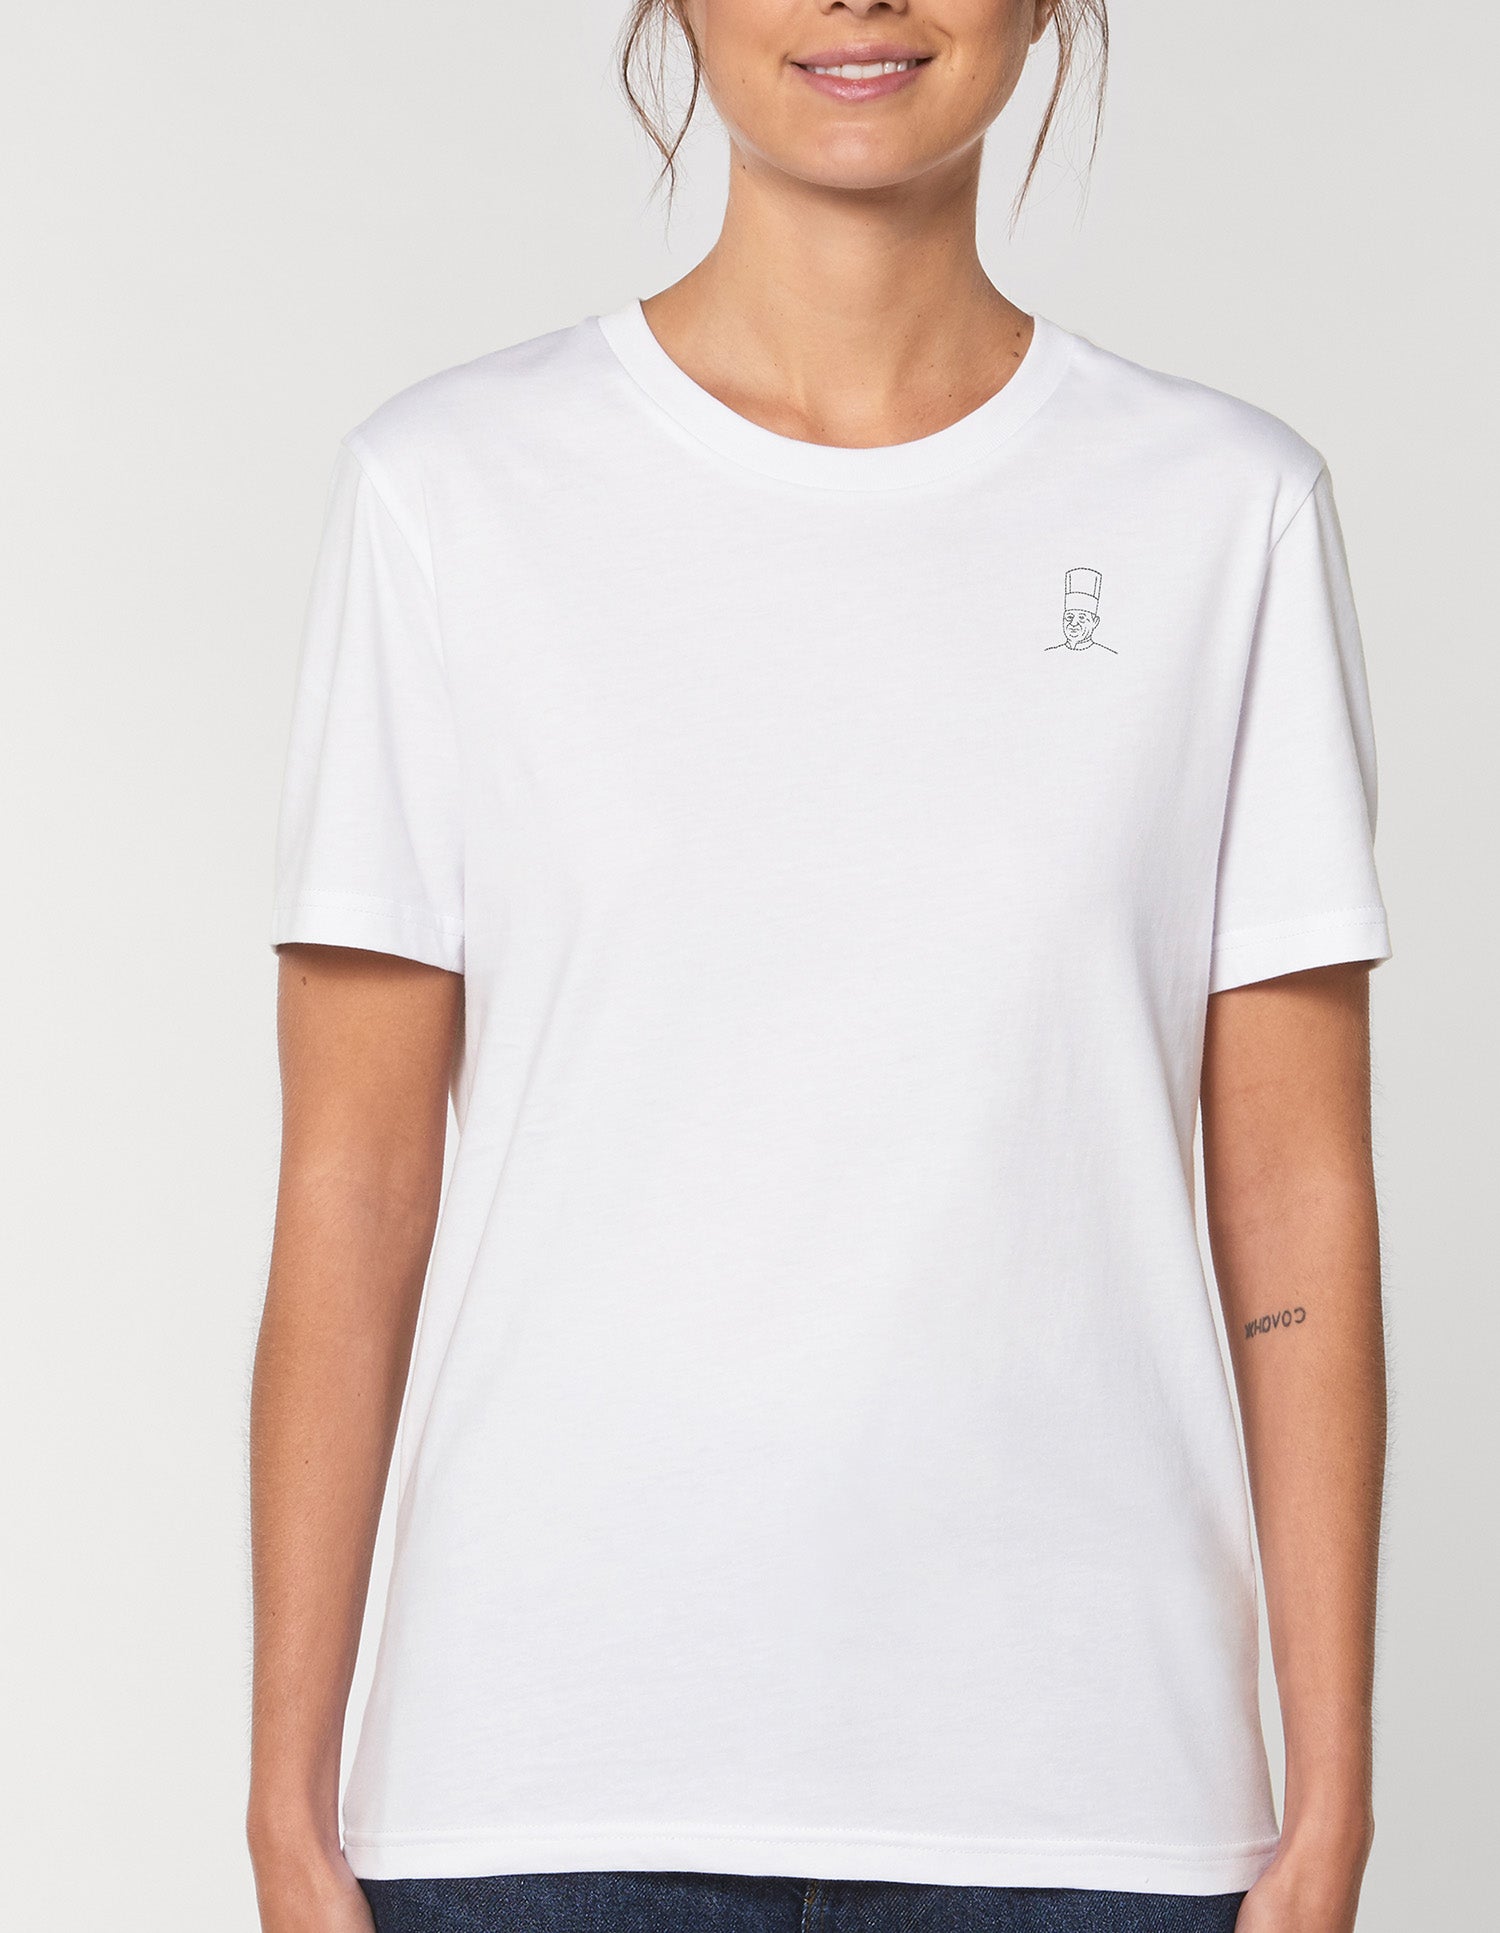 T-shirt blanc brodé Paul Bocuse